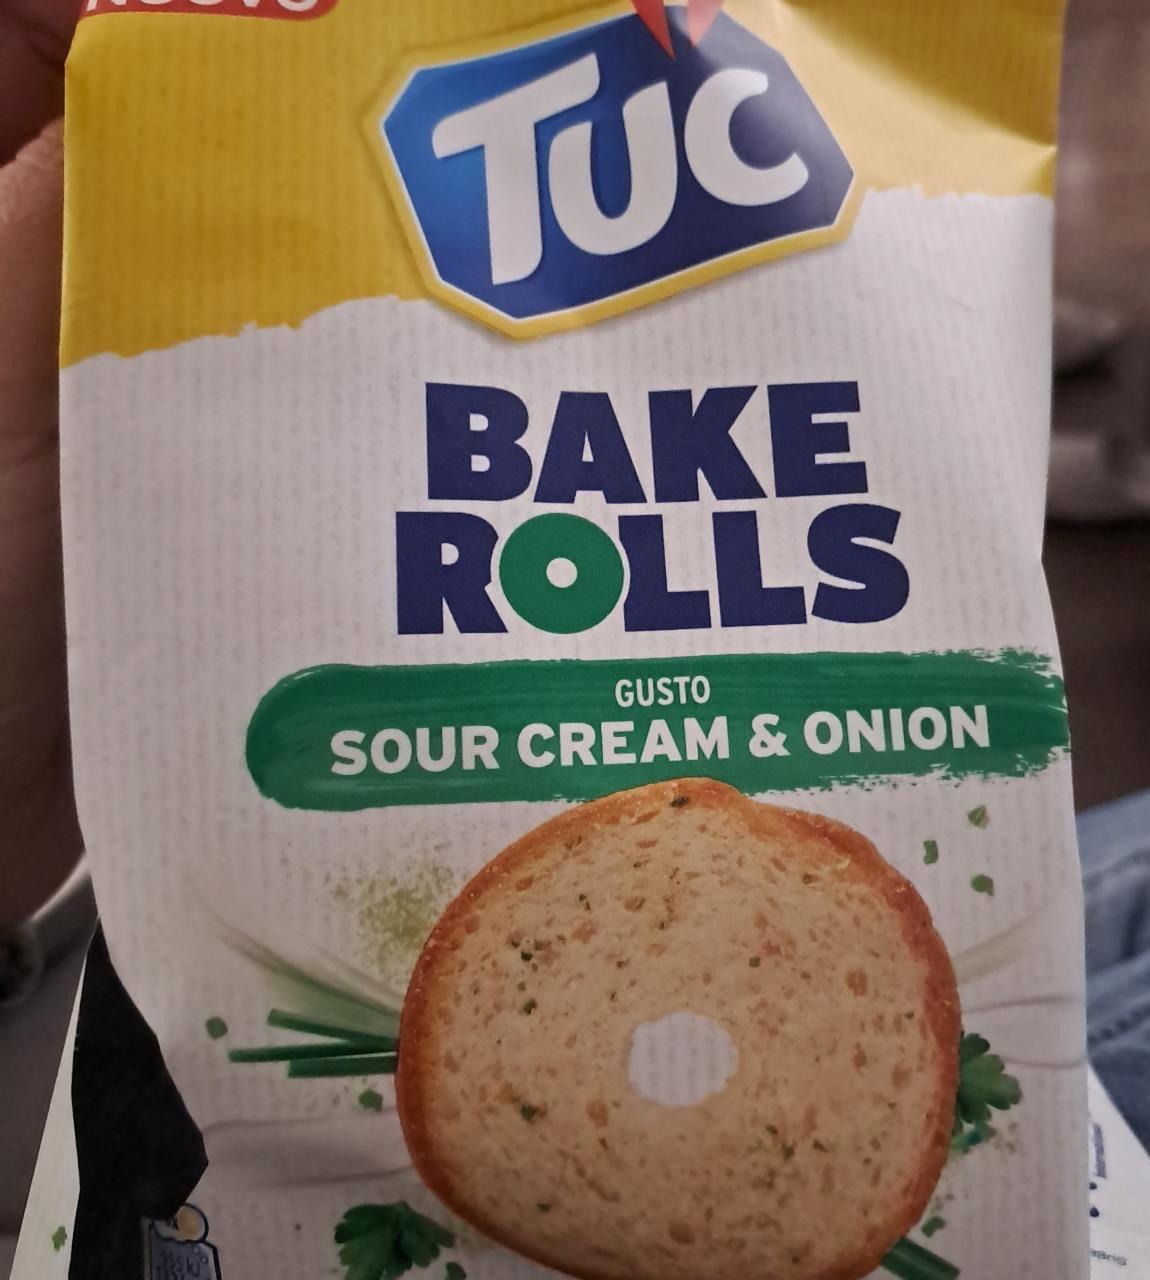 Képek - Bake Rolls Sour cream & onion Tuc